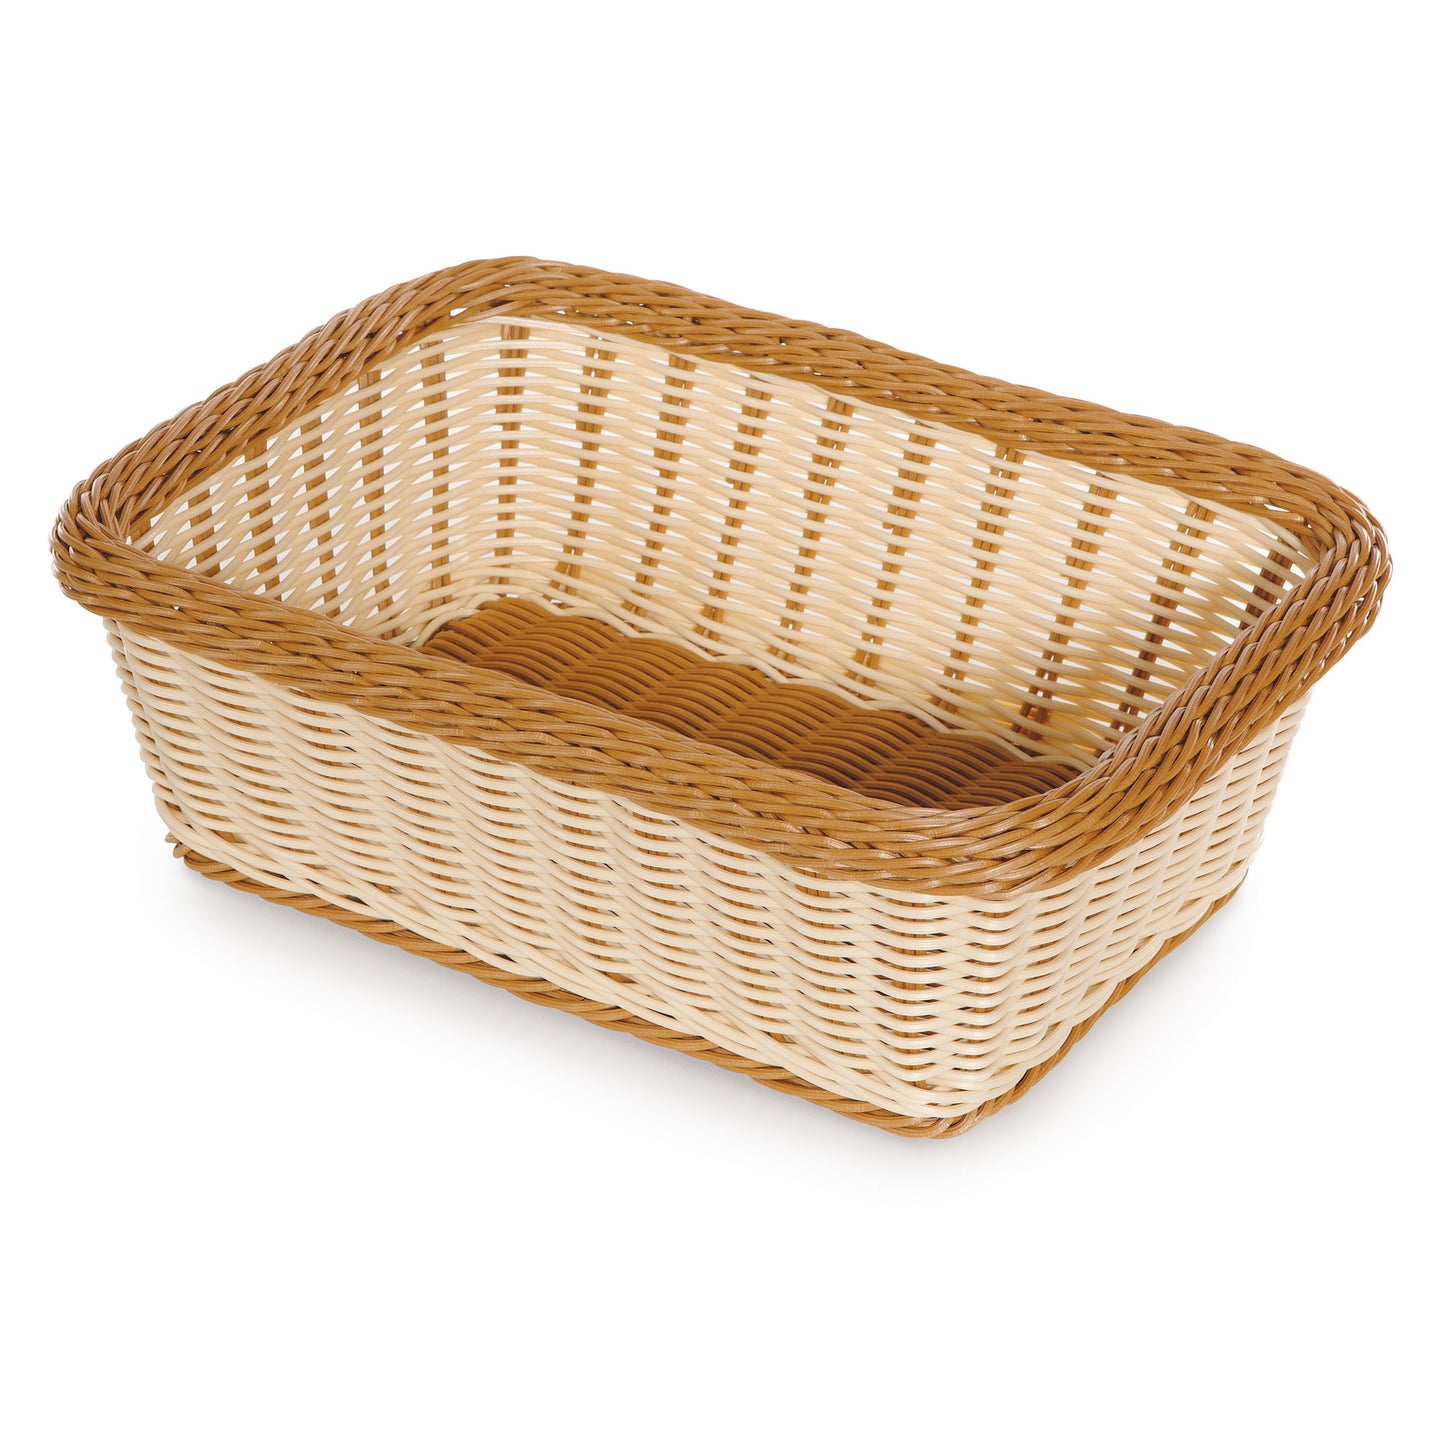 15" x 11" Rectangular Basket, 5" Deep